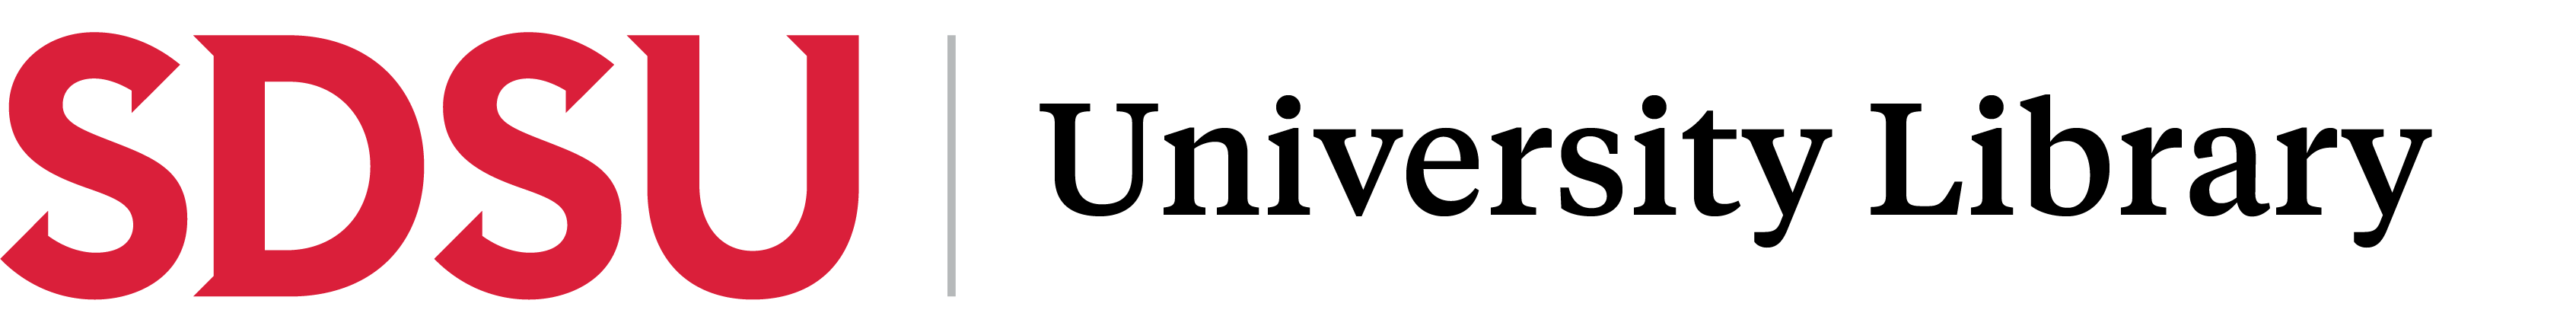 SDSU library logo